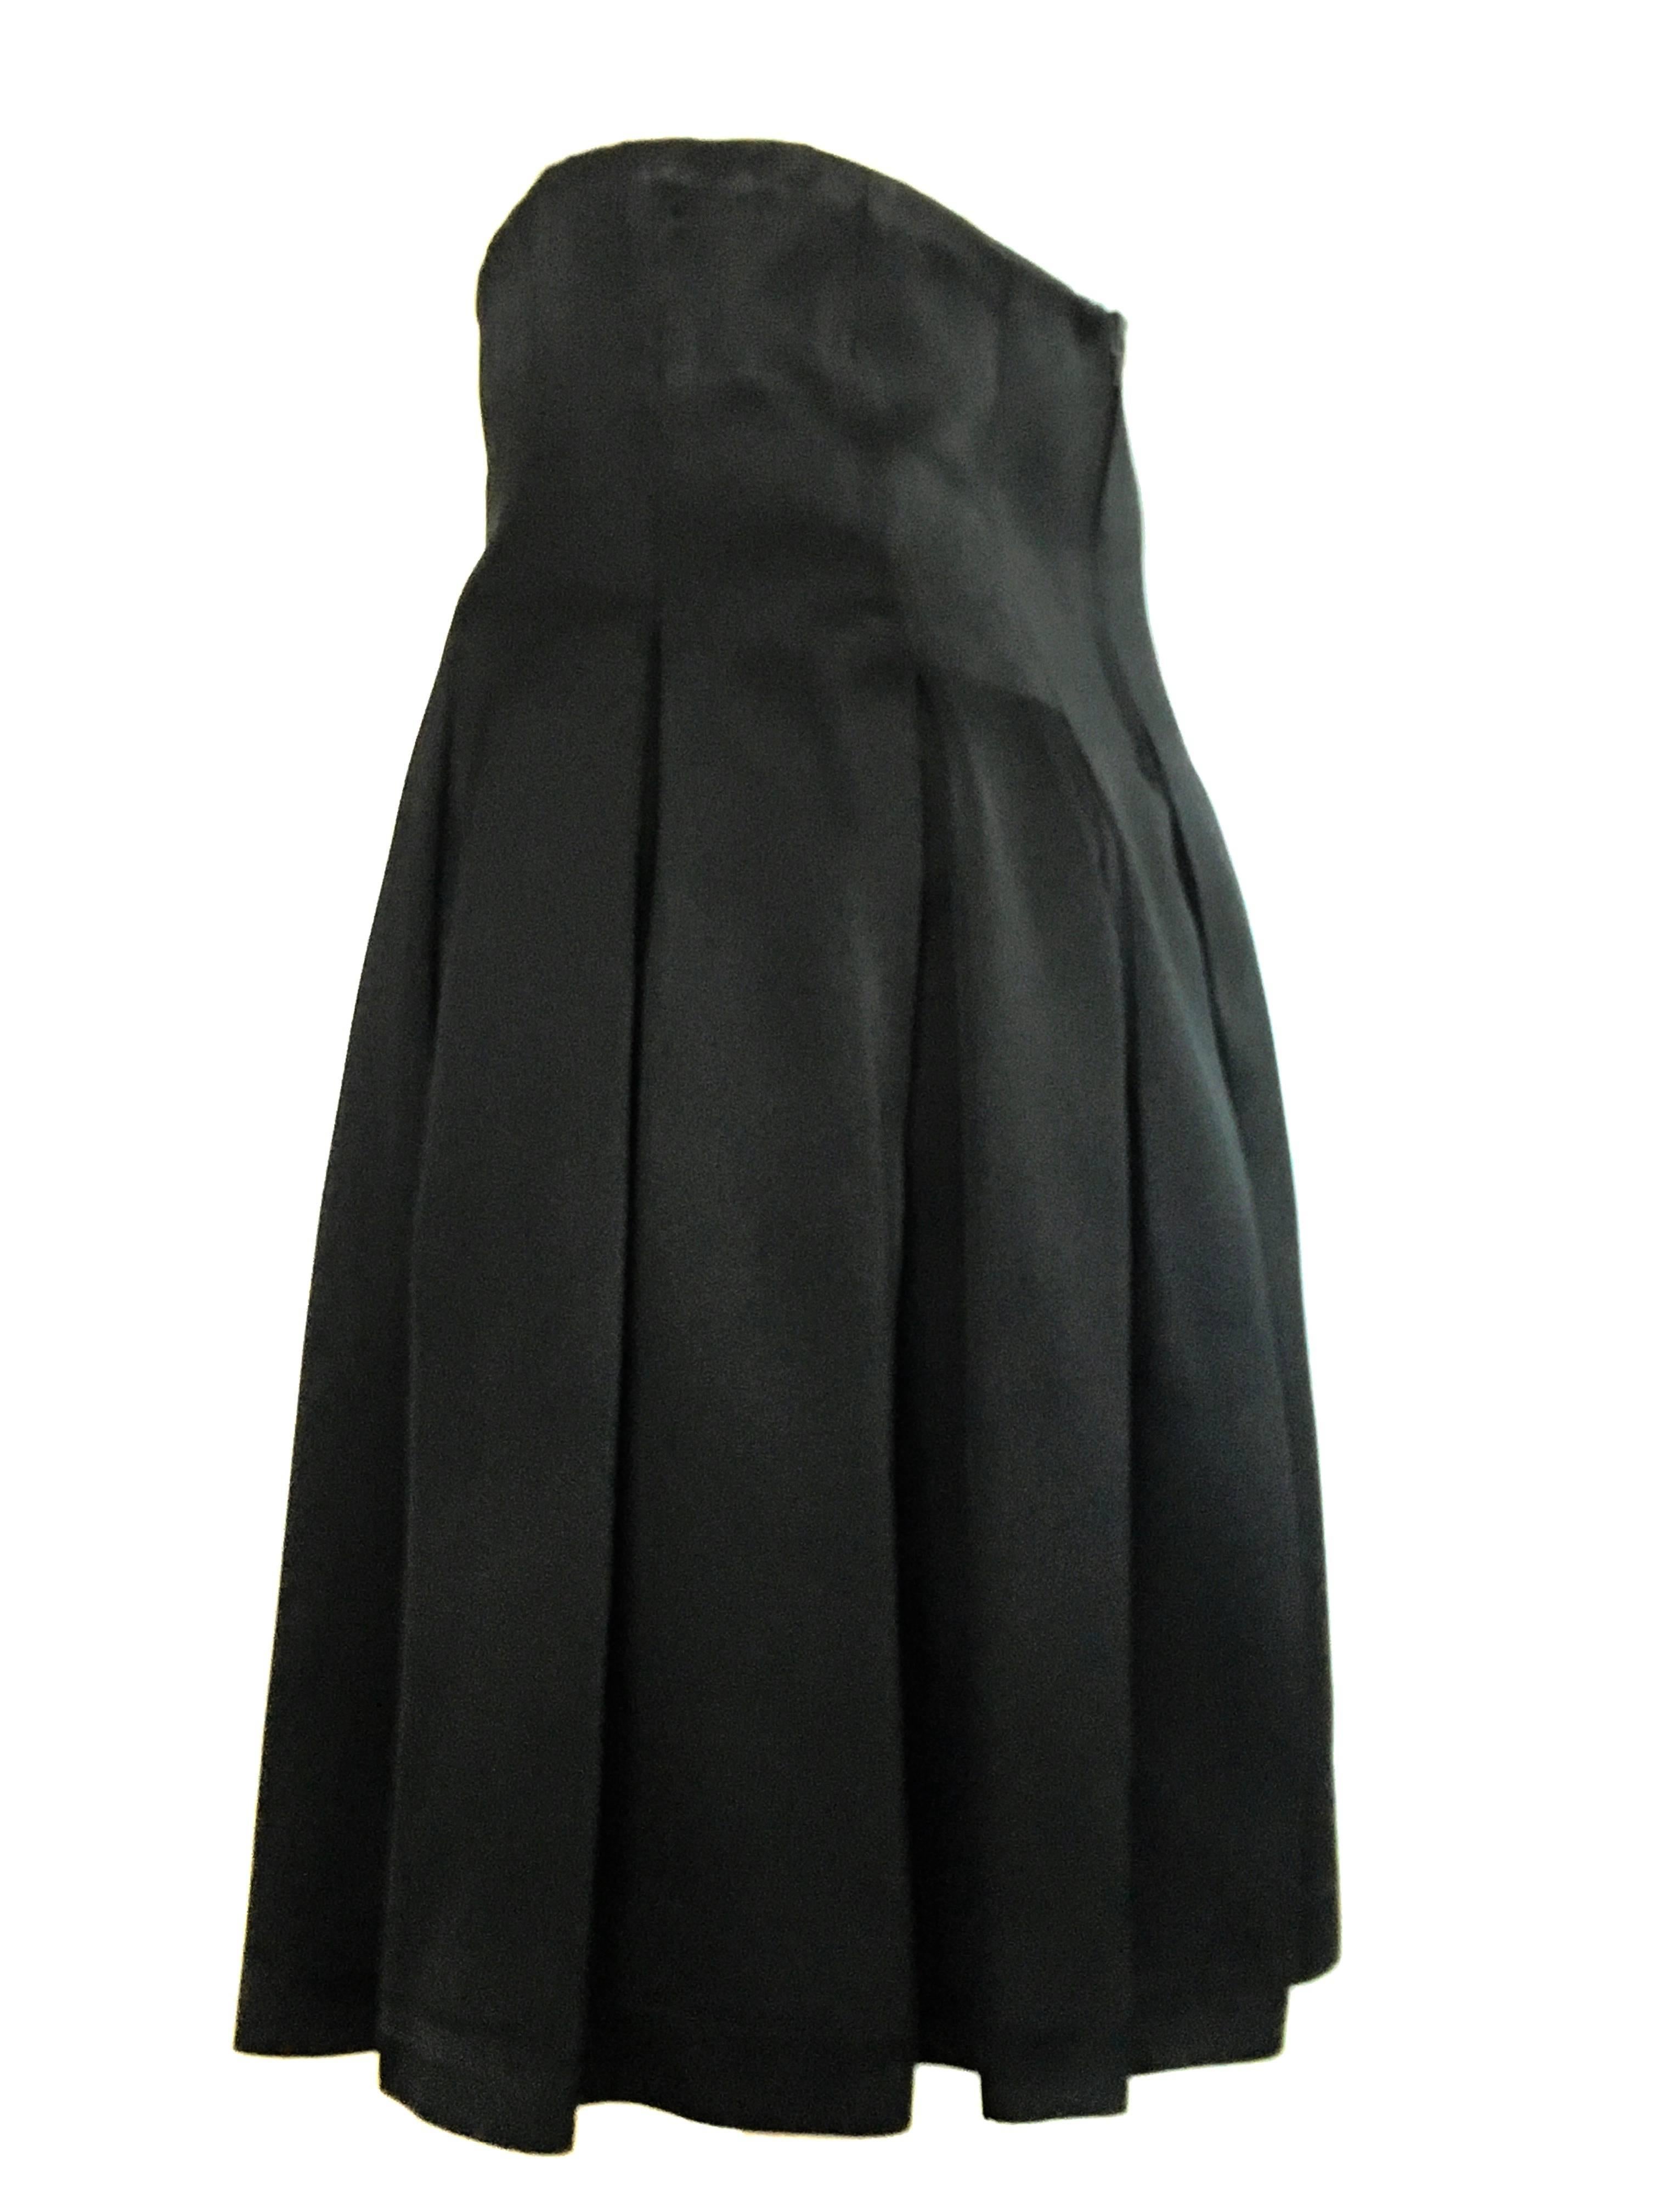 Patrick Kelly Paris 1980s Black Pleated Skirt Size 6. For Sale 4